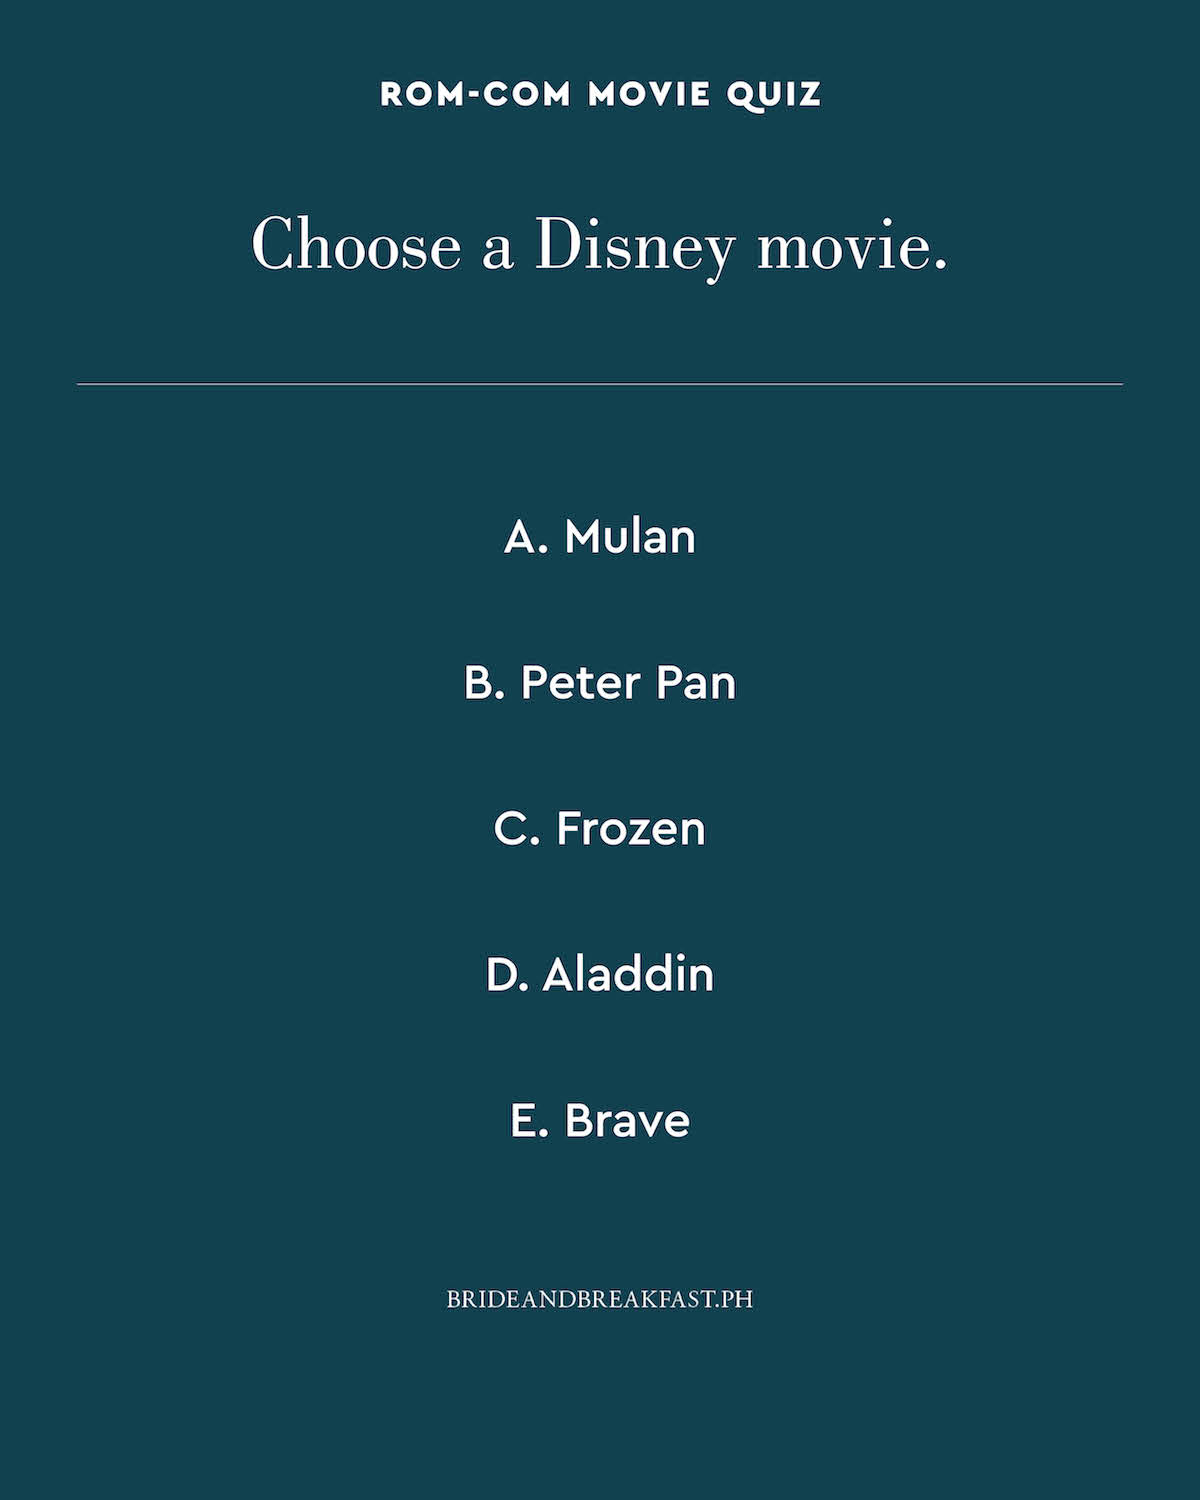 Choose a Disney movie. A. Mulan B. Peter Pan C. Frozen D. Aladdin E. Brave